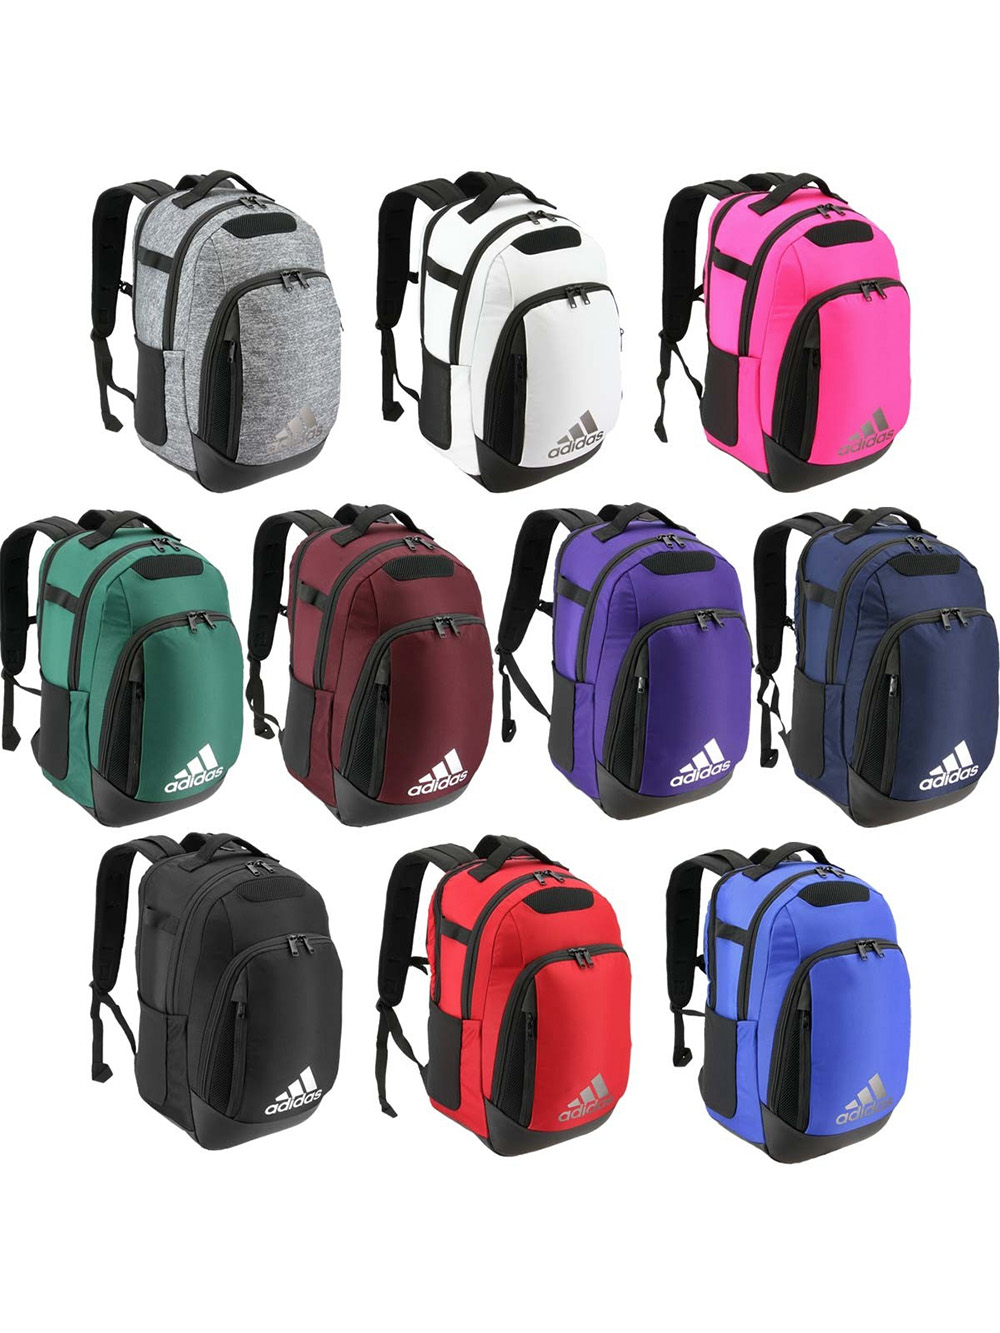 adidas equipment backpack